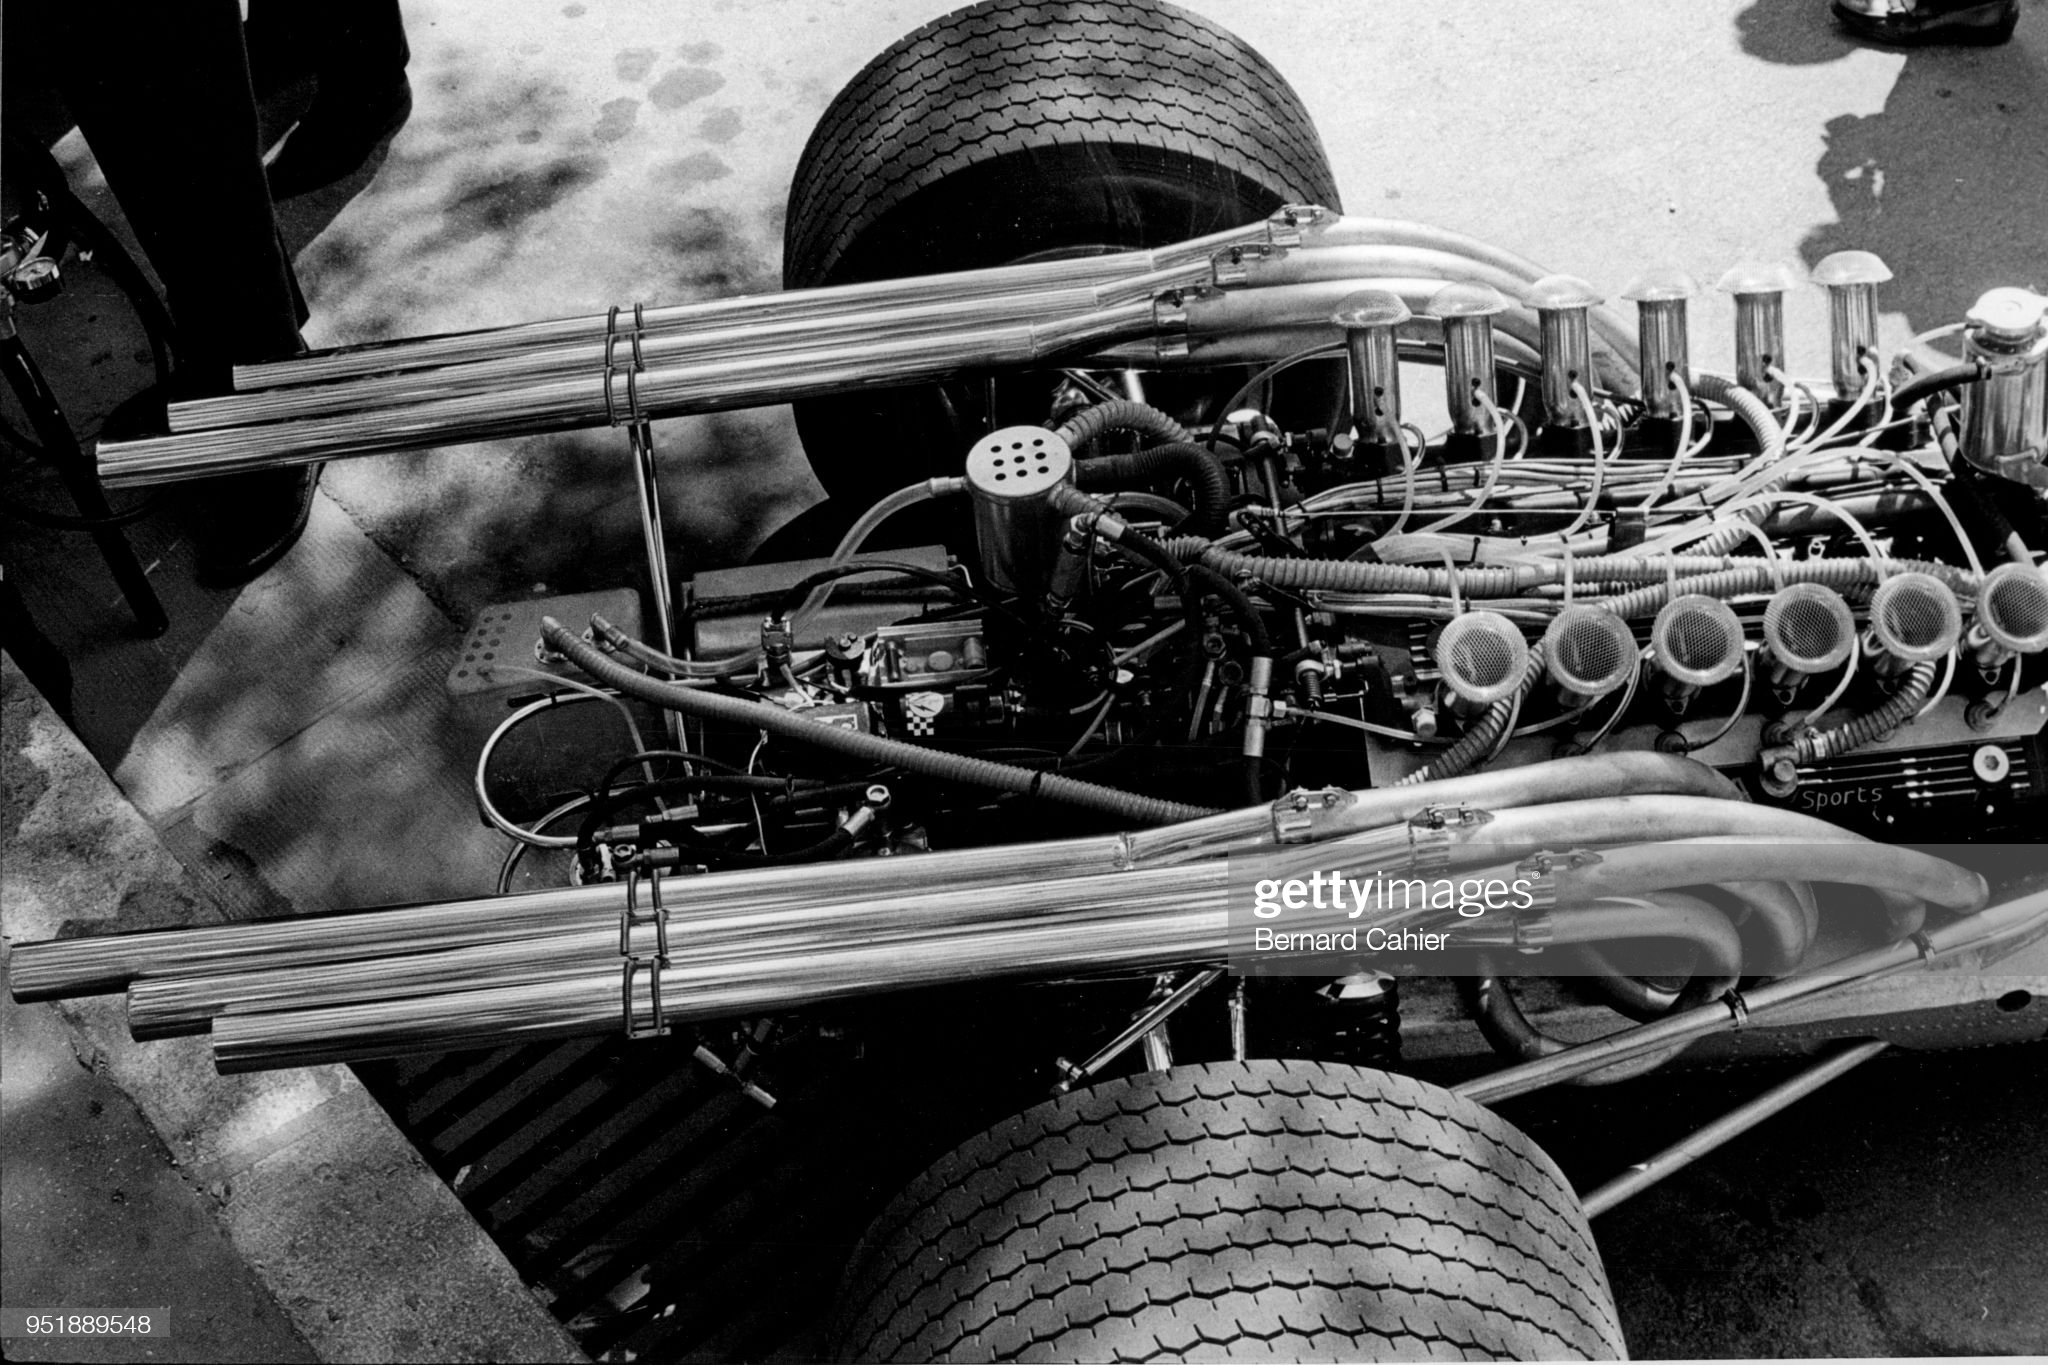 Matra engine MS9 3.0 V12, Grand Prix of Monaco, 26 May 1968.